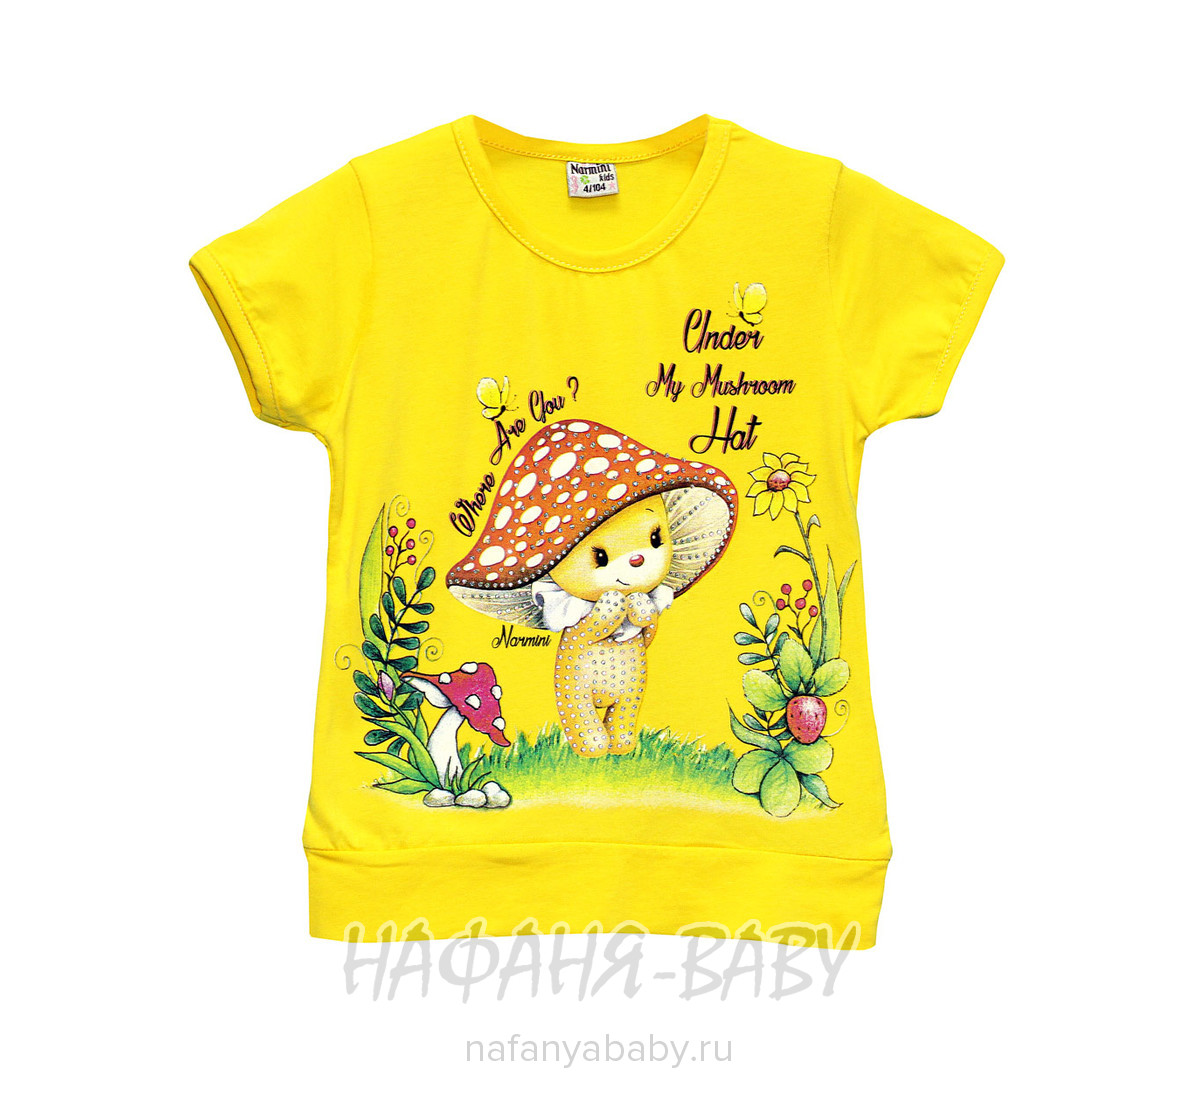 Детская футболка NARMINI арт: 5509, 1-4 года, цвет желтый, оптом Турция